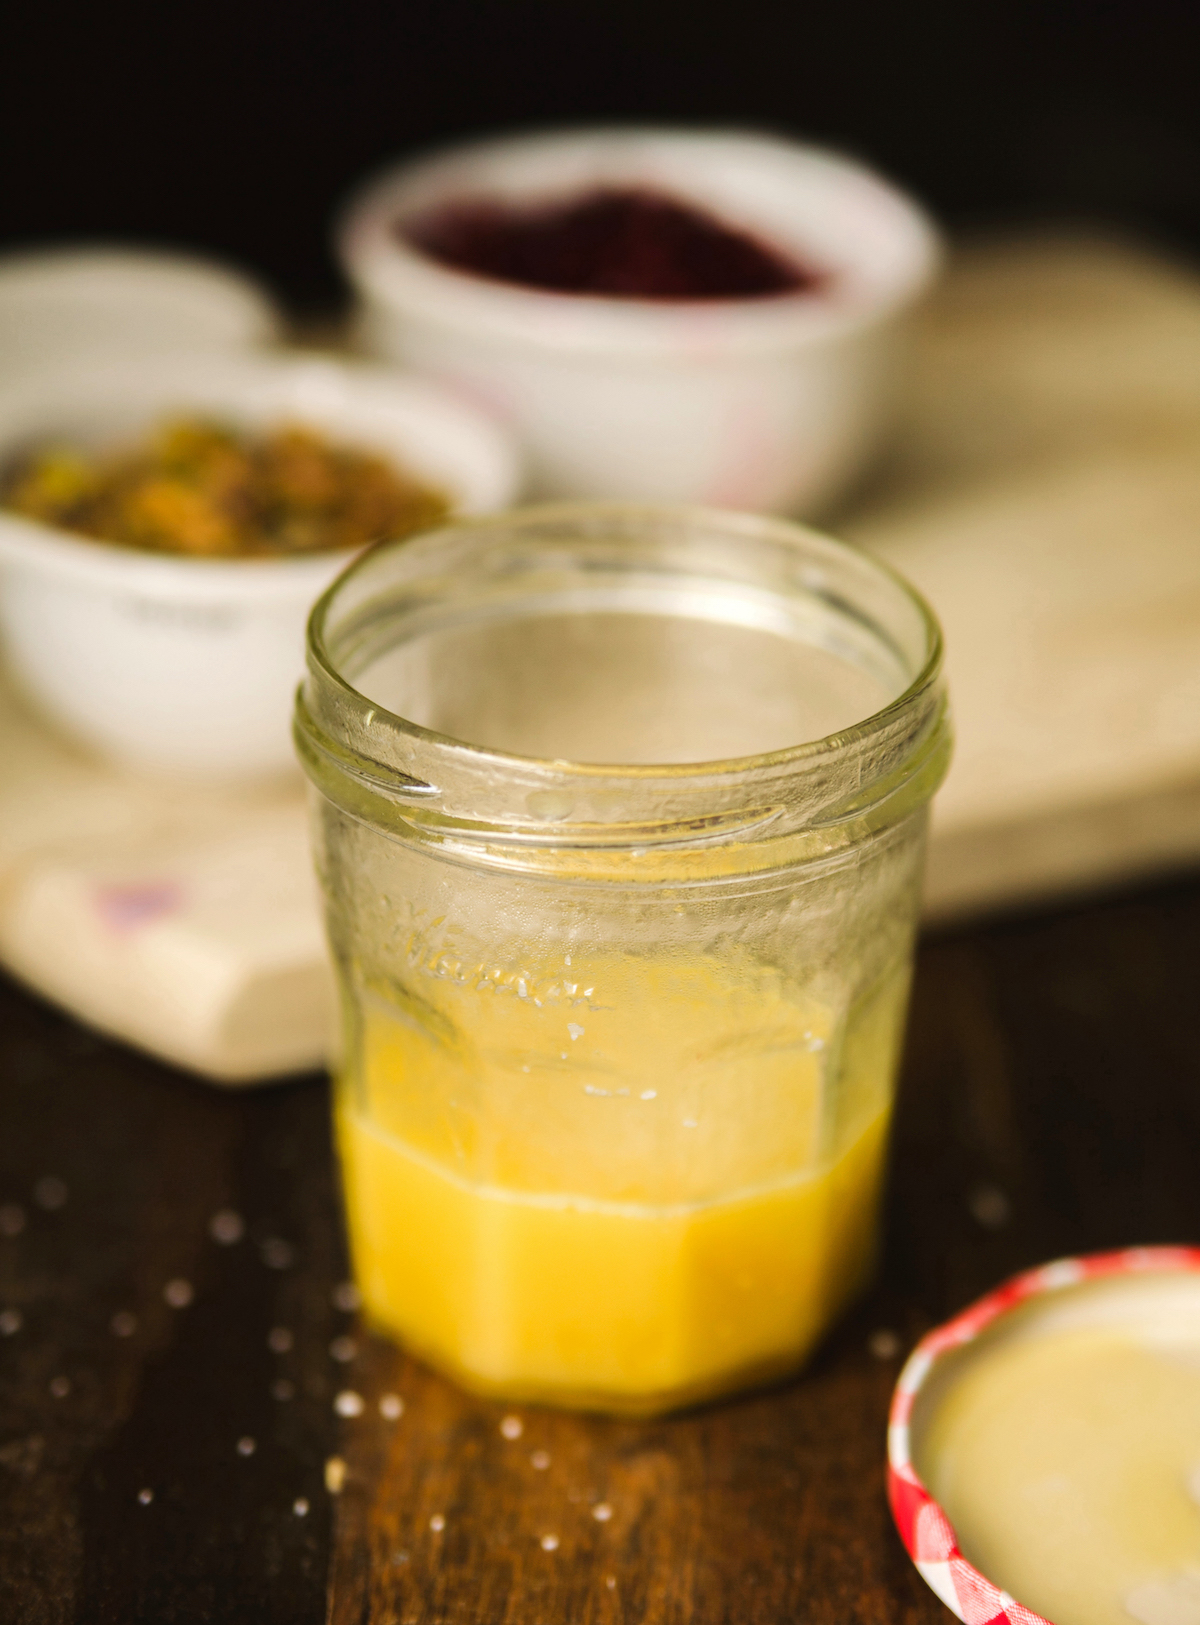 Lemon juice, olive oil, and honey in a glass jar